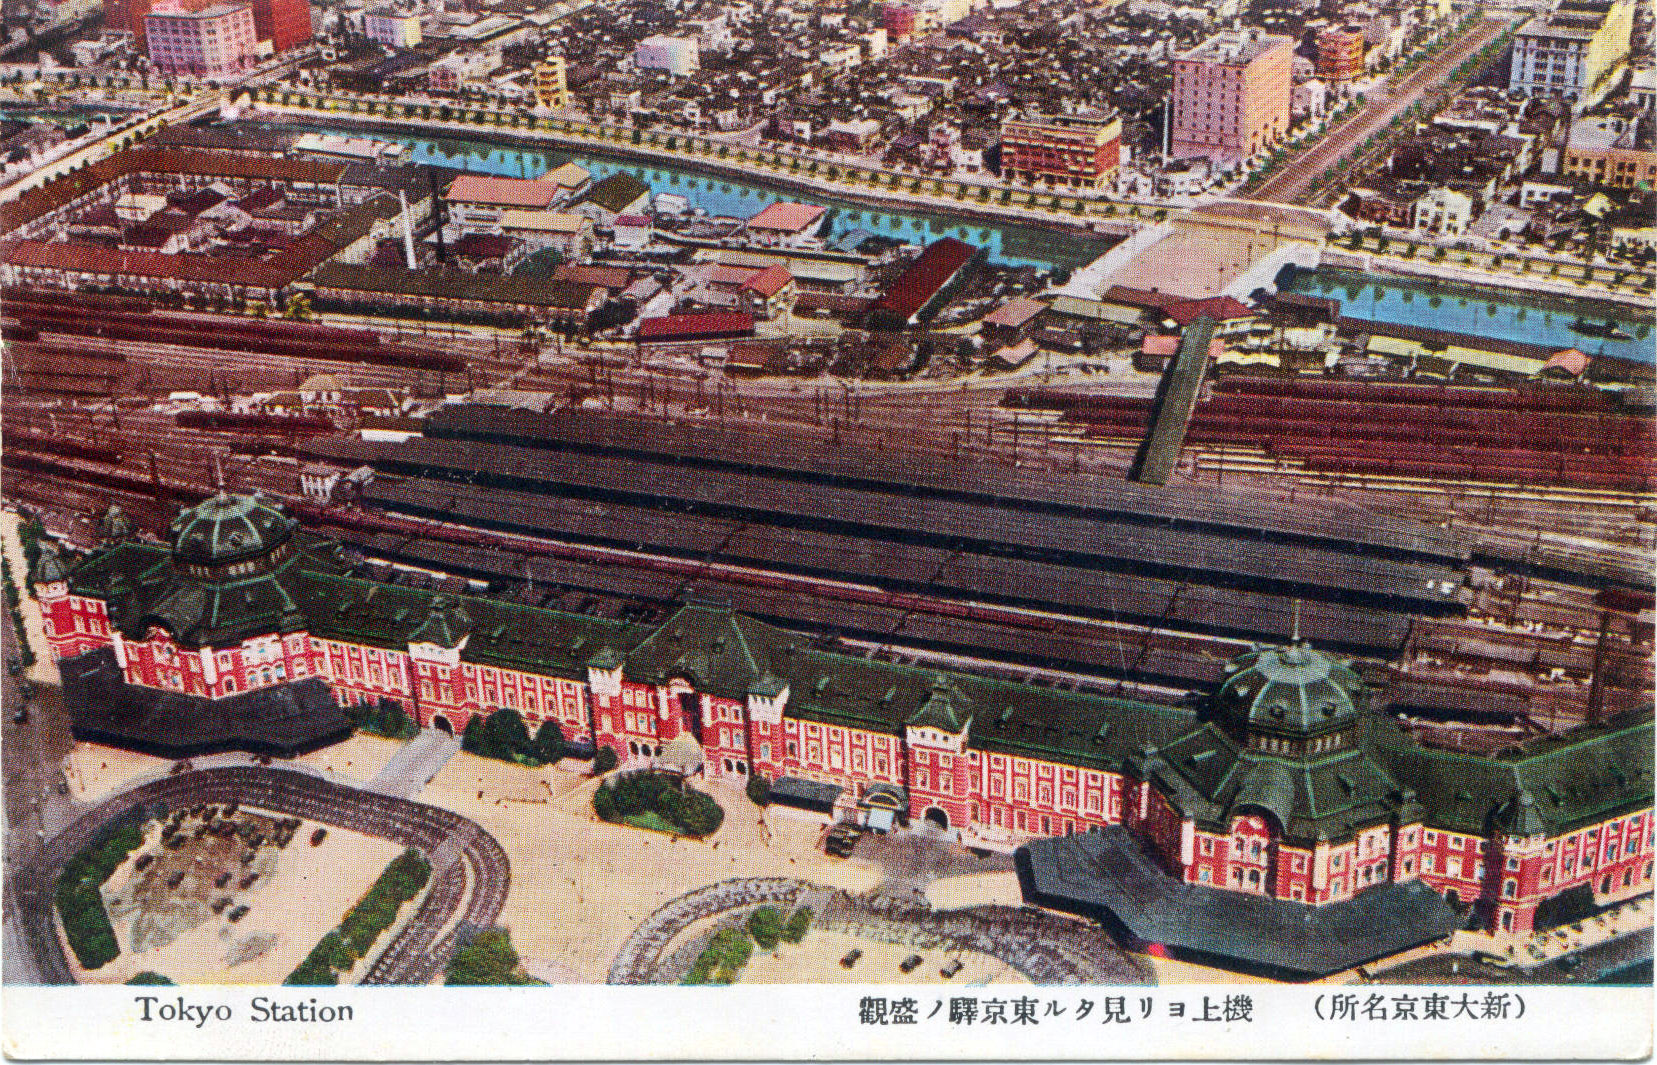 Copy-of-tokyo-station-aerial1930.jpg